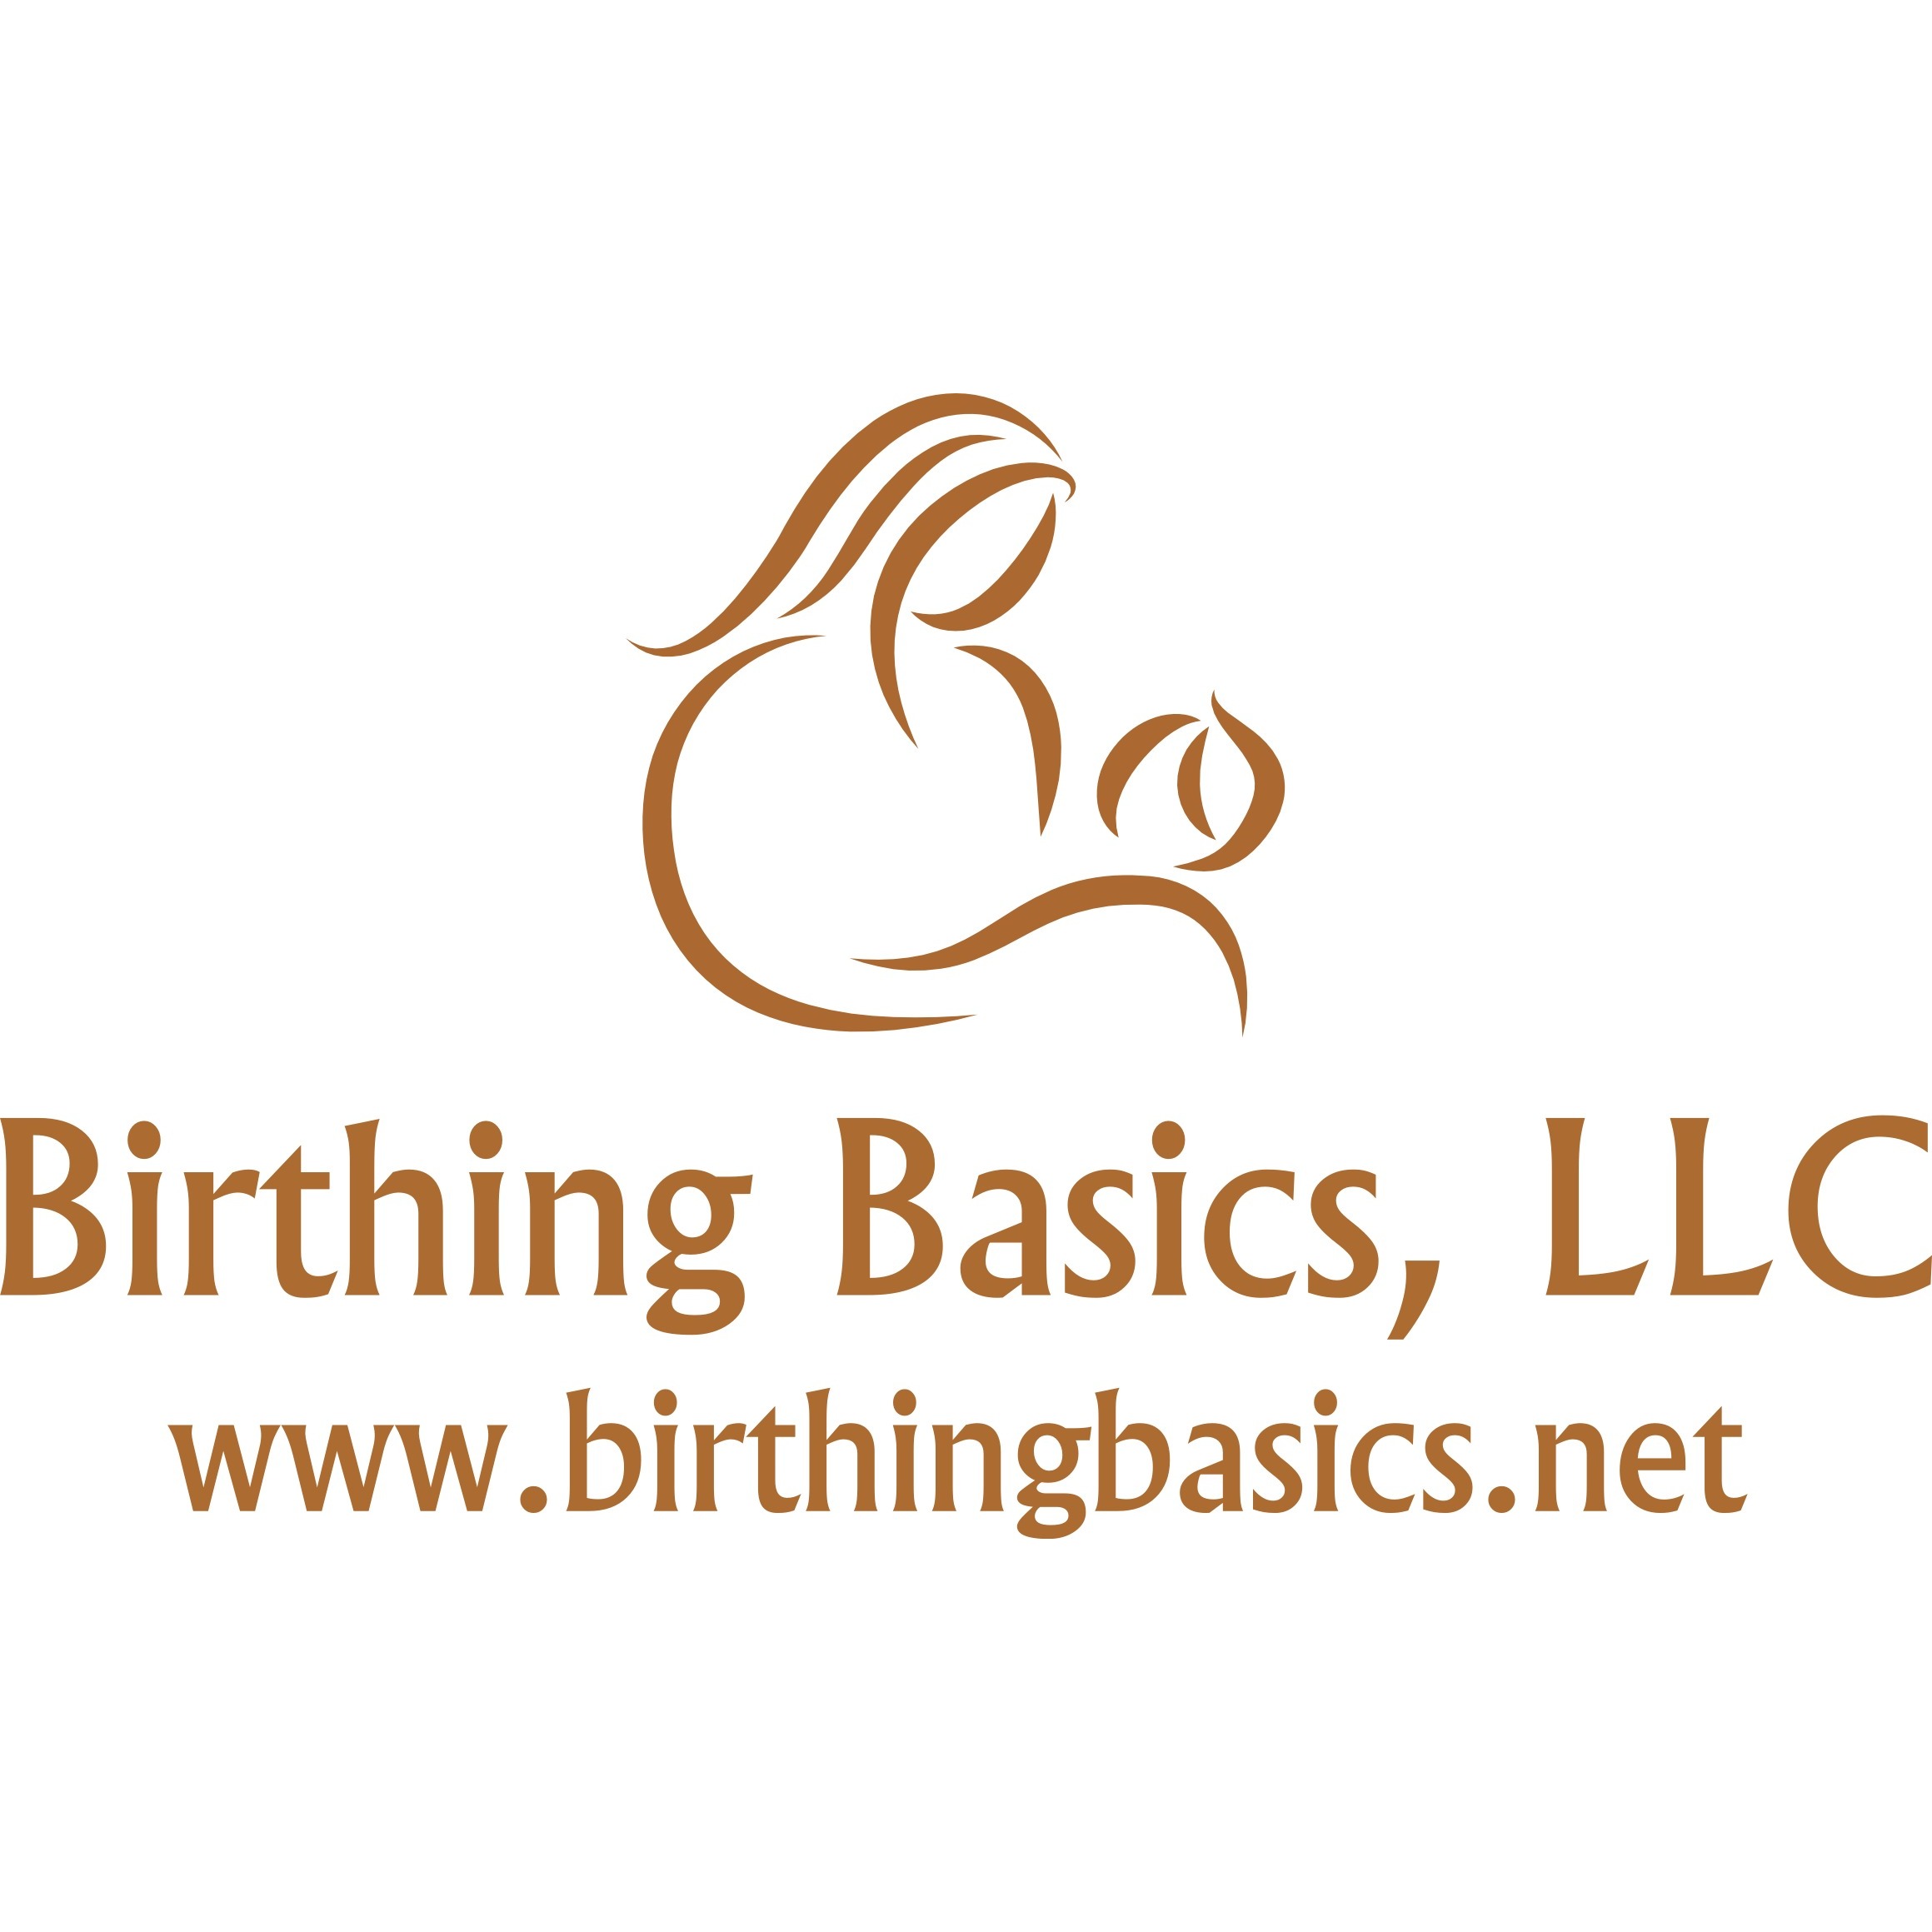 Birthing Basics, LLC Photo